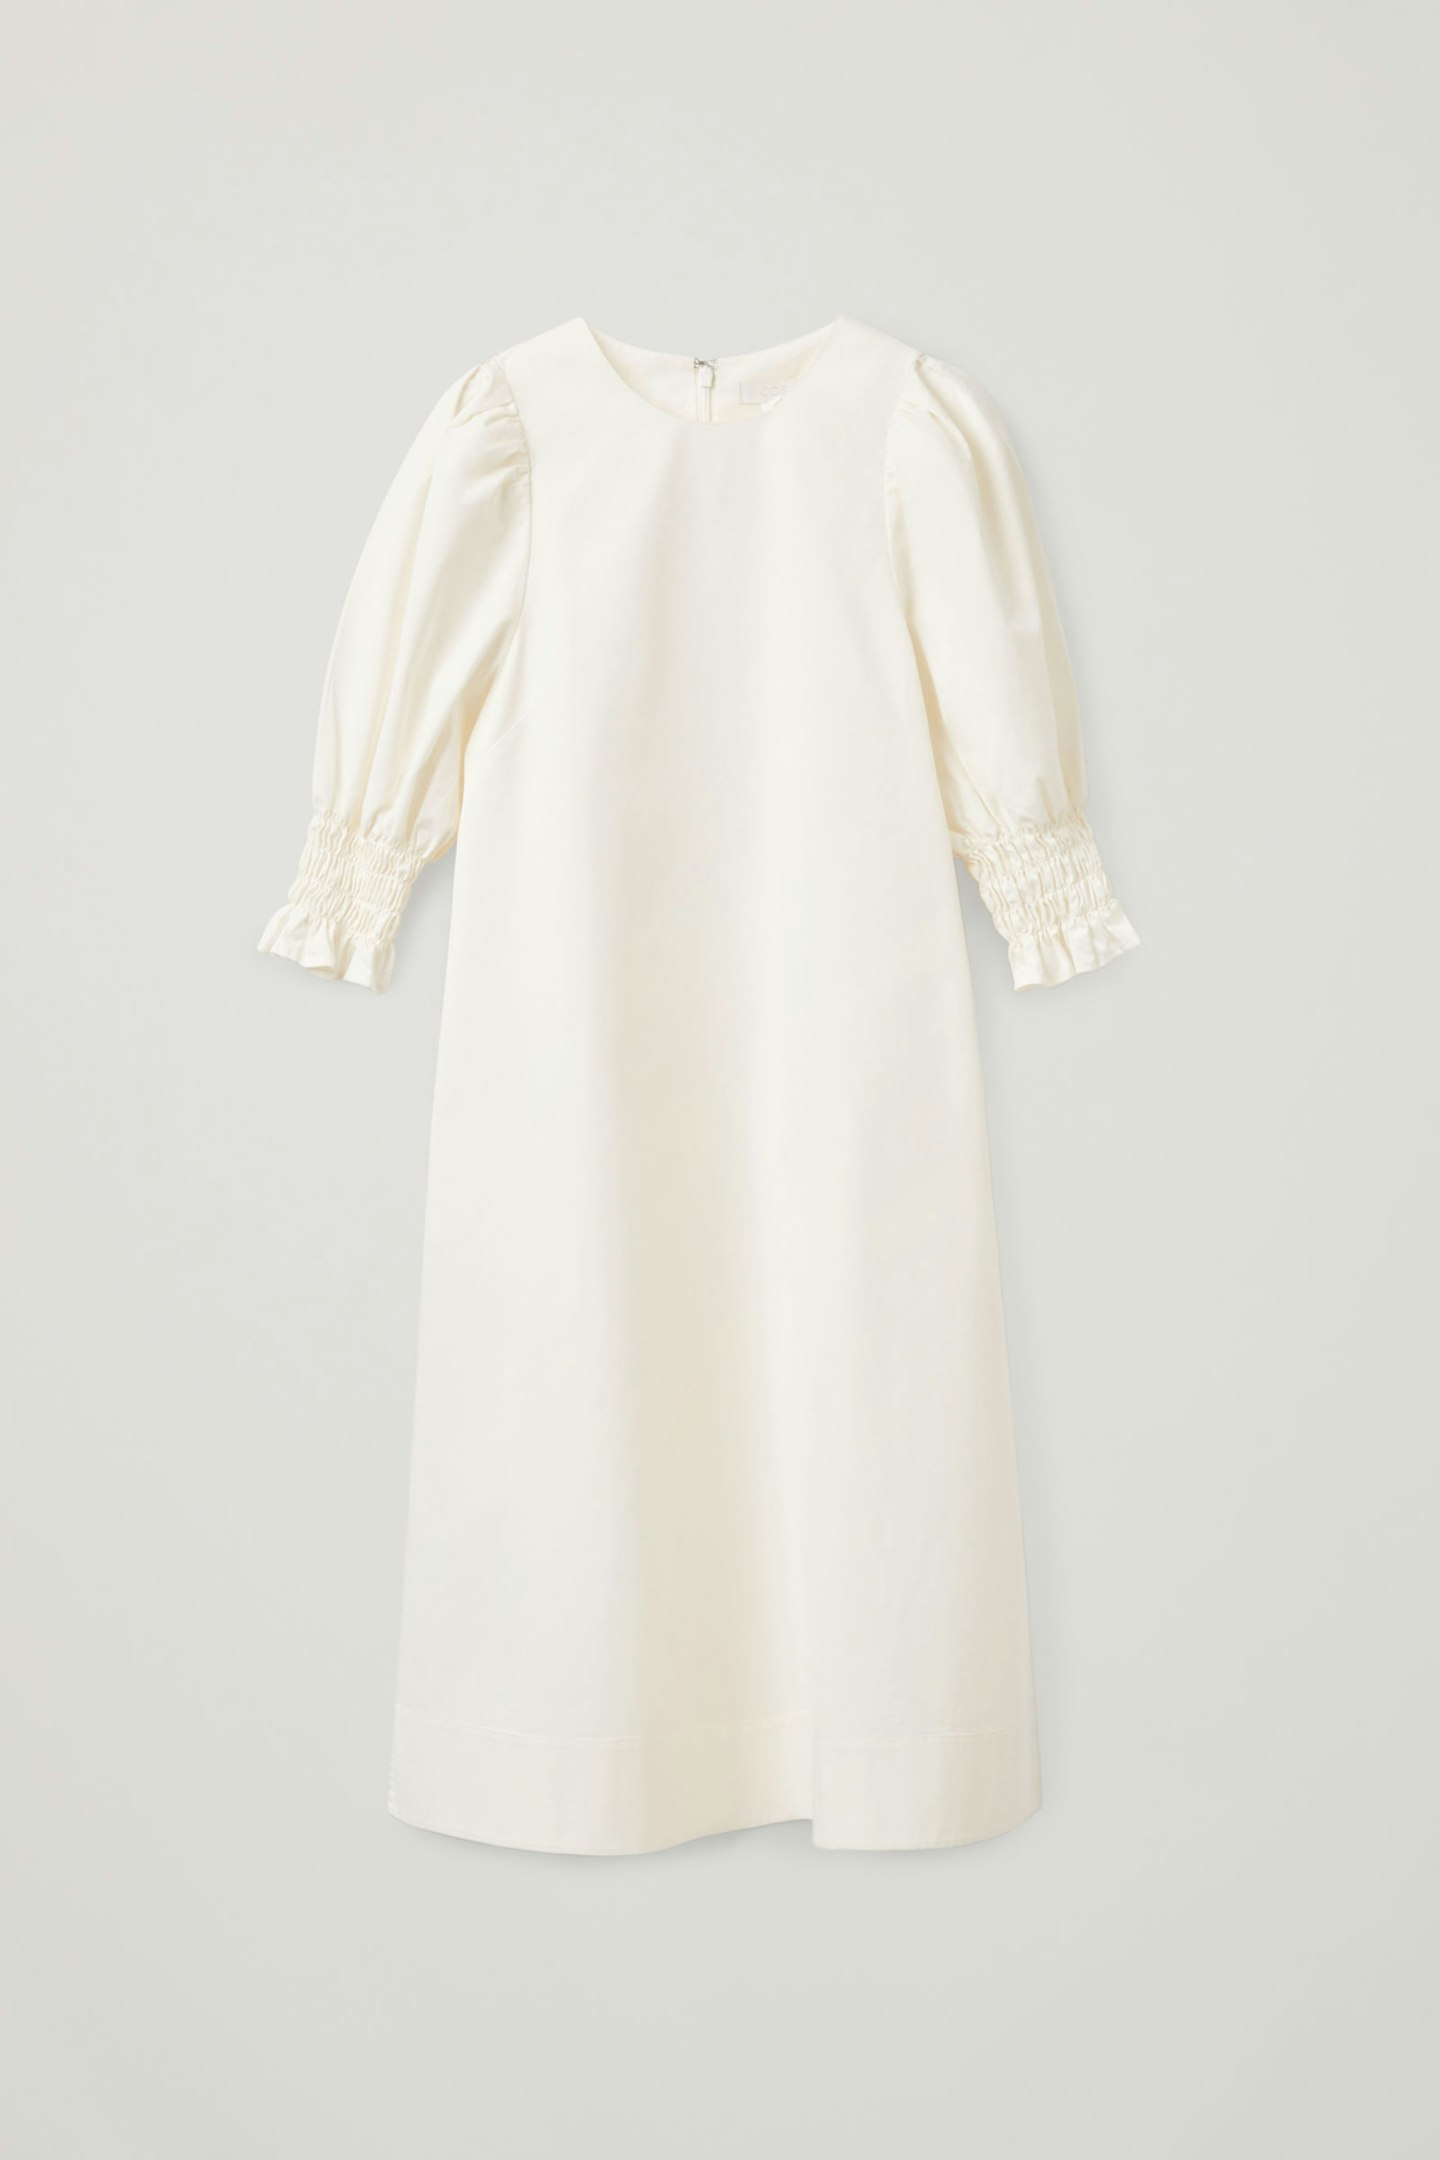 COS, Smocked Puff Sleeve Summer Dress, £59